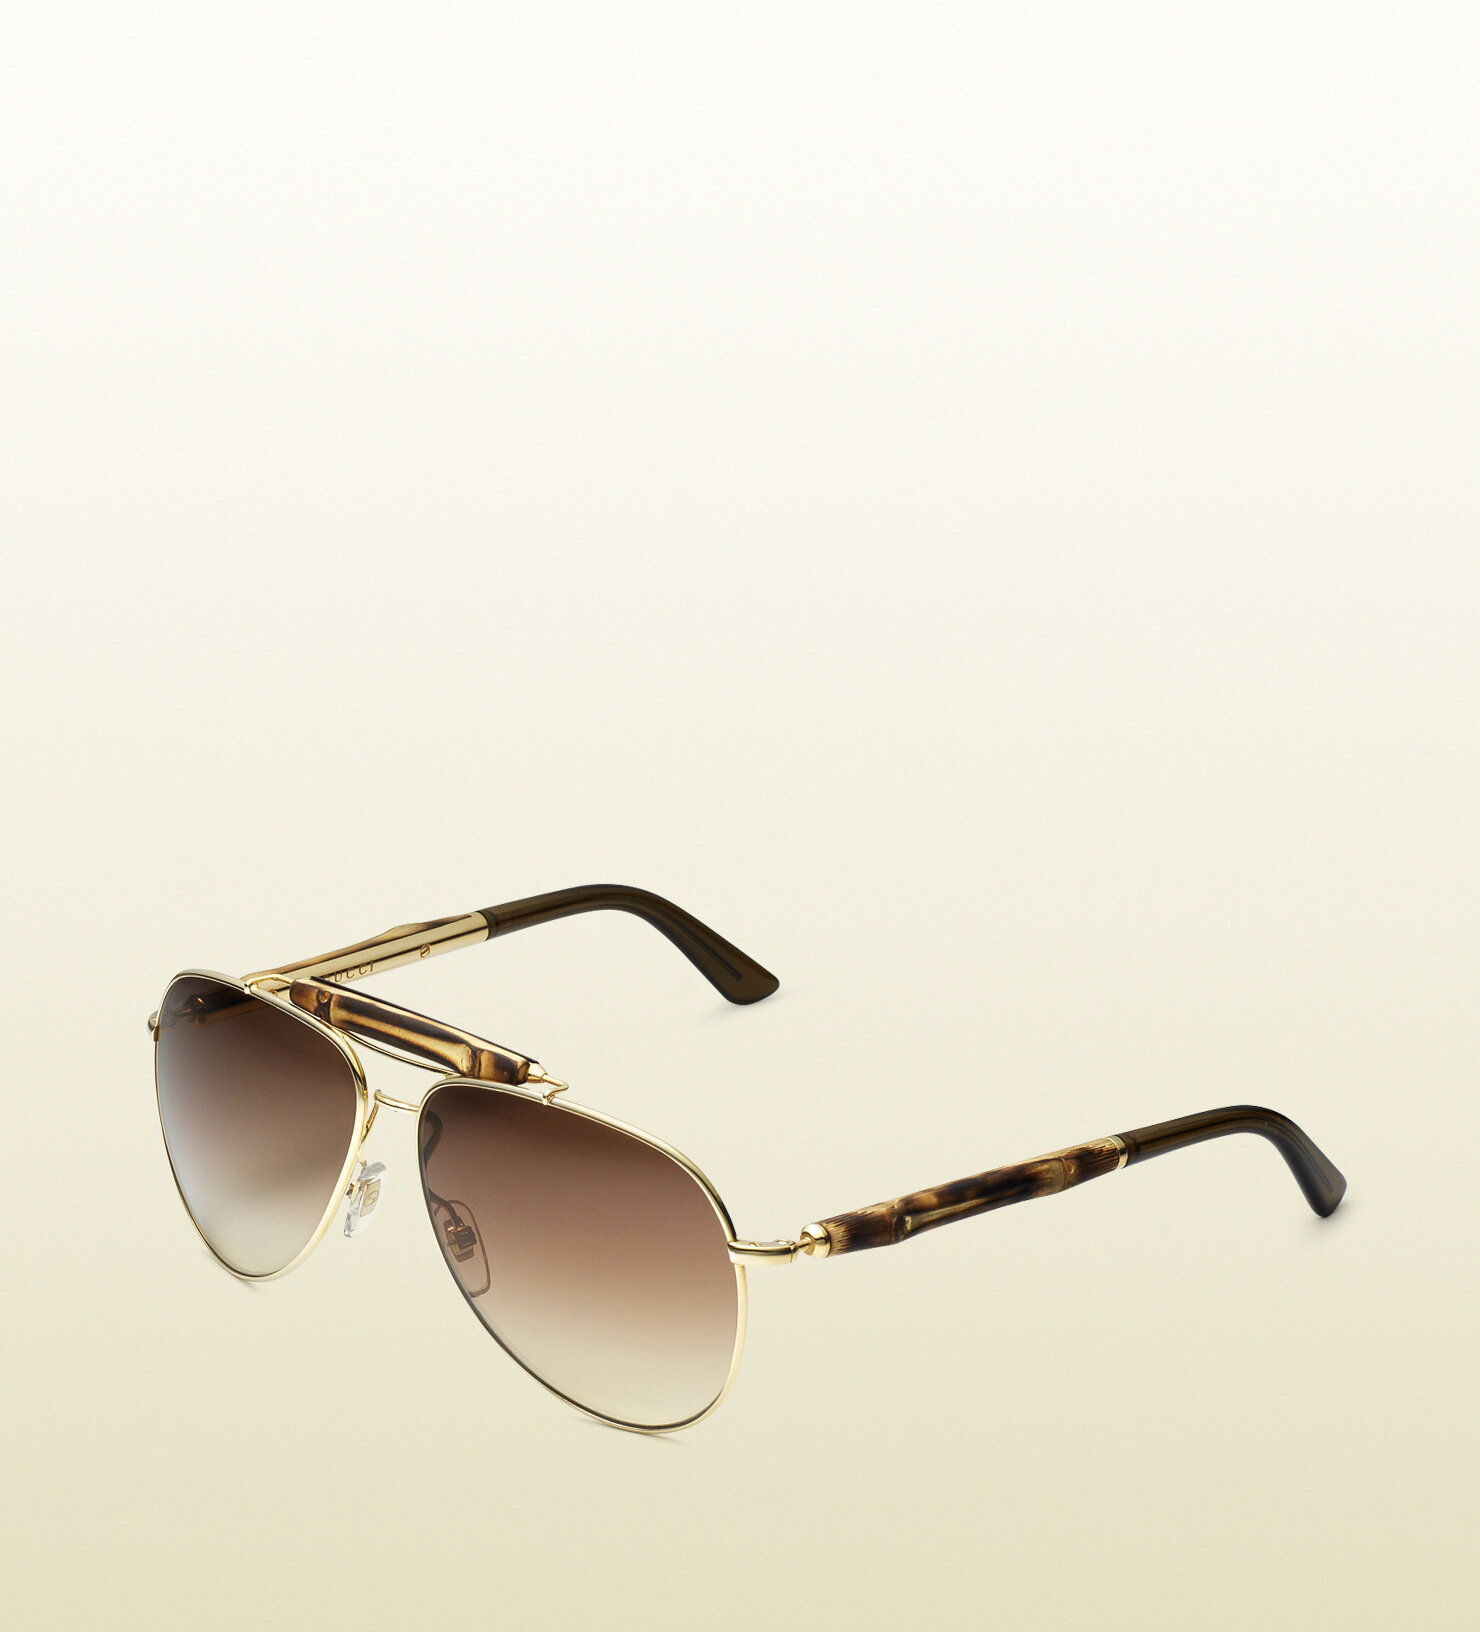 Gucci Bamboo Aviator Sunglasses in Brown.jpeg